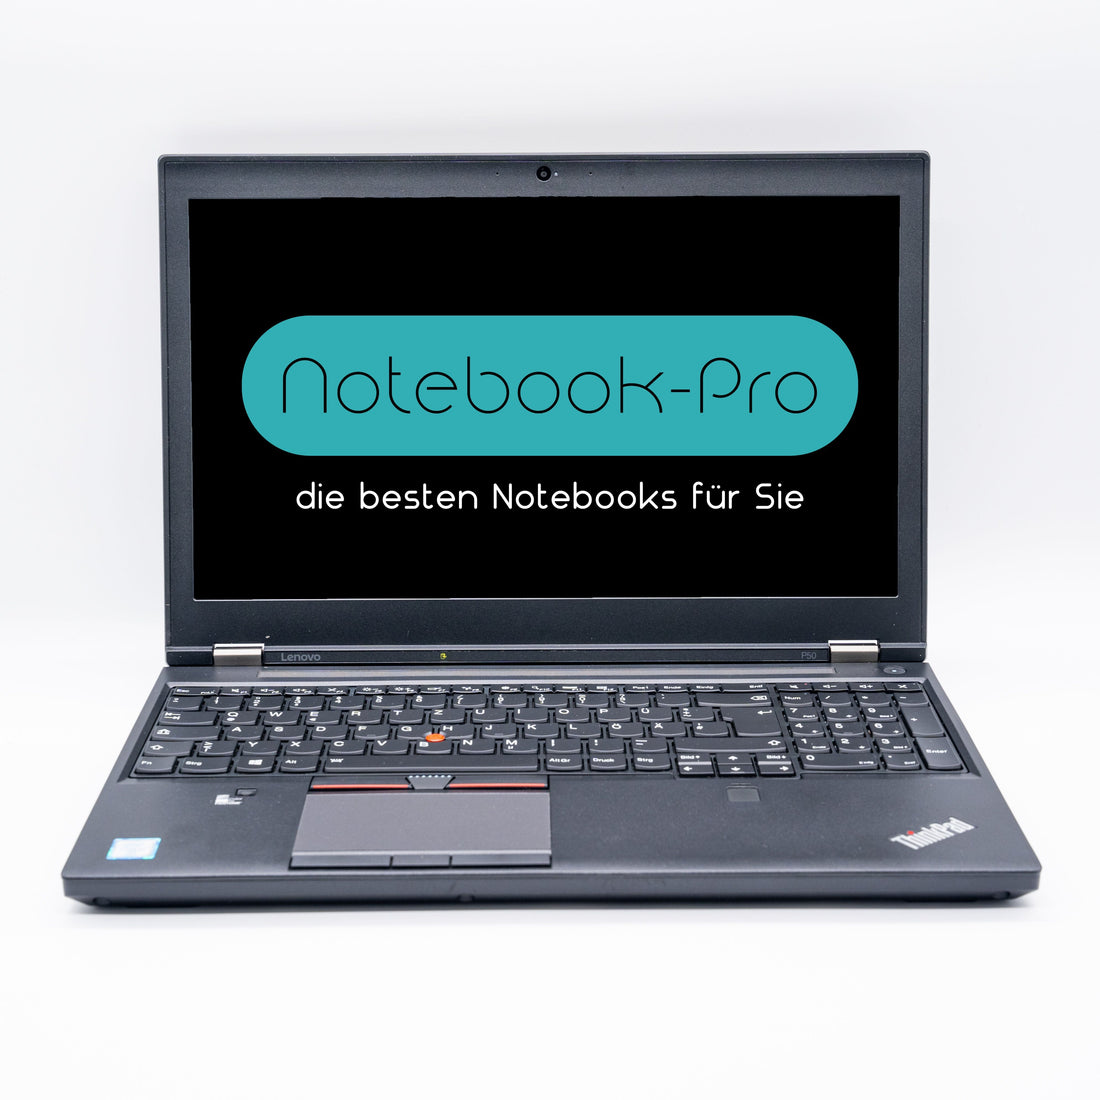 Lenovo ThinkPad P50 Intel Core i7-6820HQ NVIDIA® QUADRO M1000M Laptops Notebook-Pro Intel Core i7-6820HQ 16GB DDR4 512GB